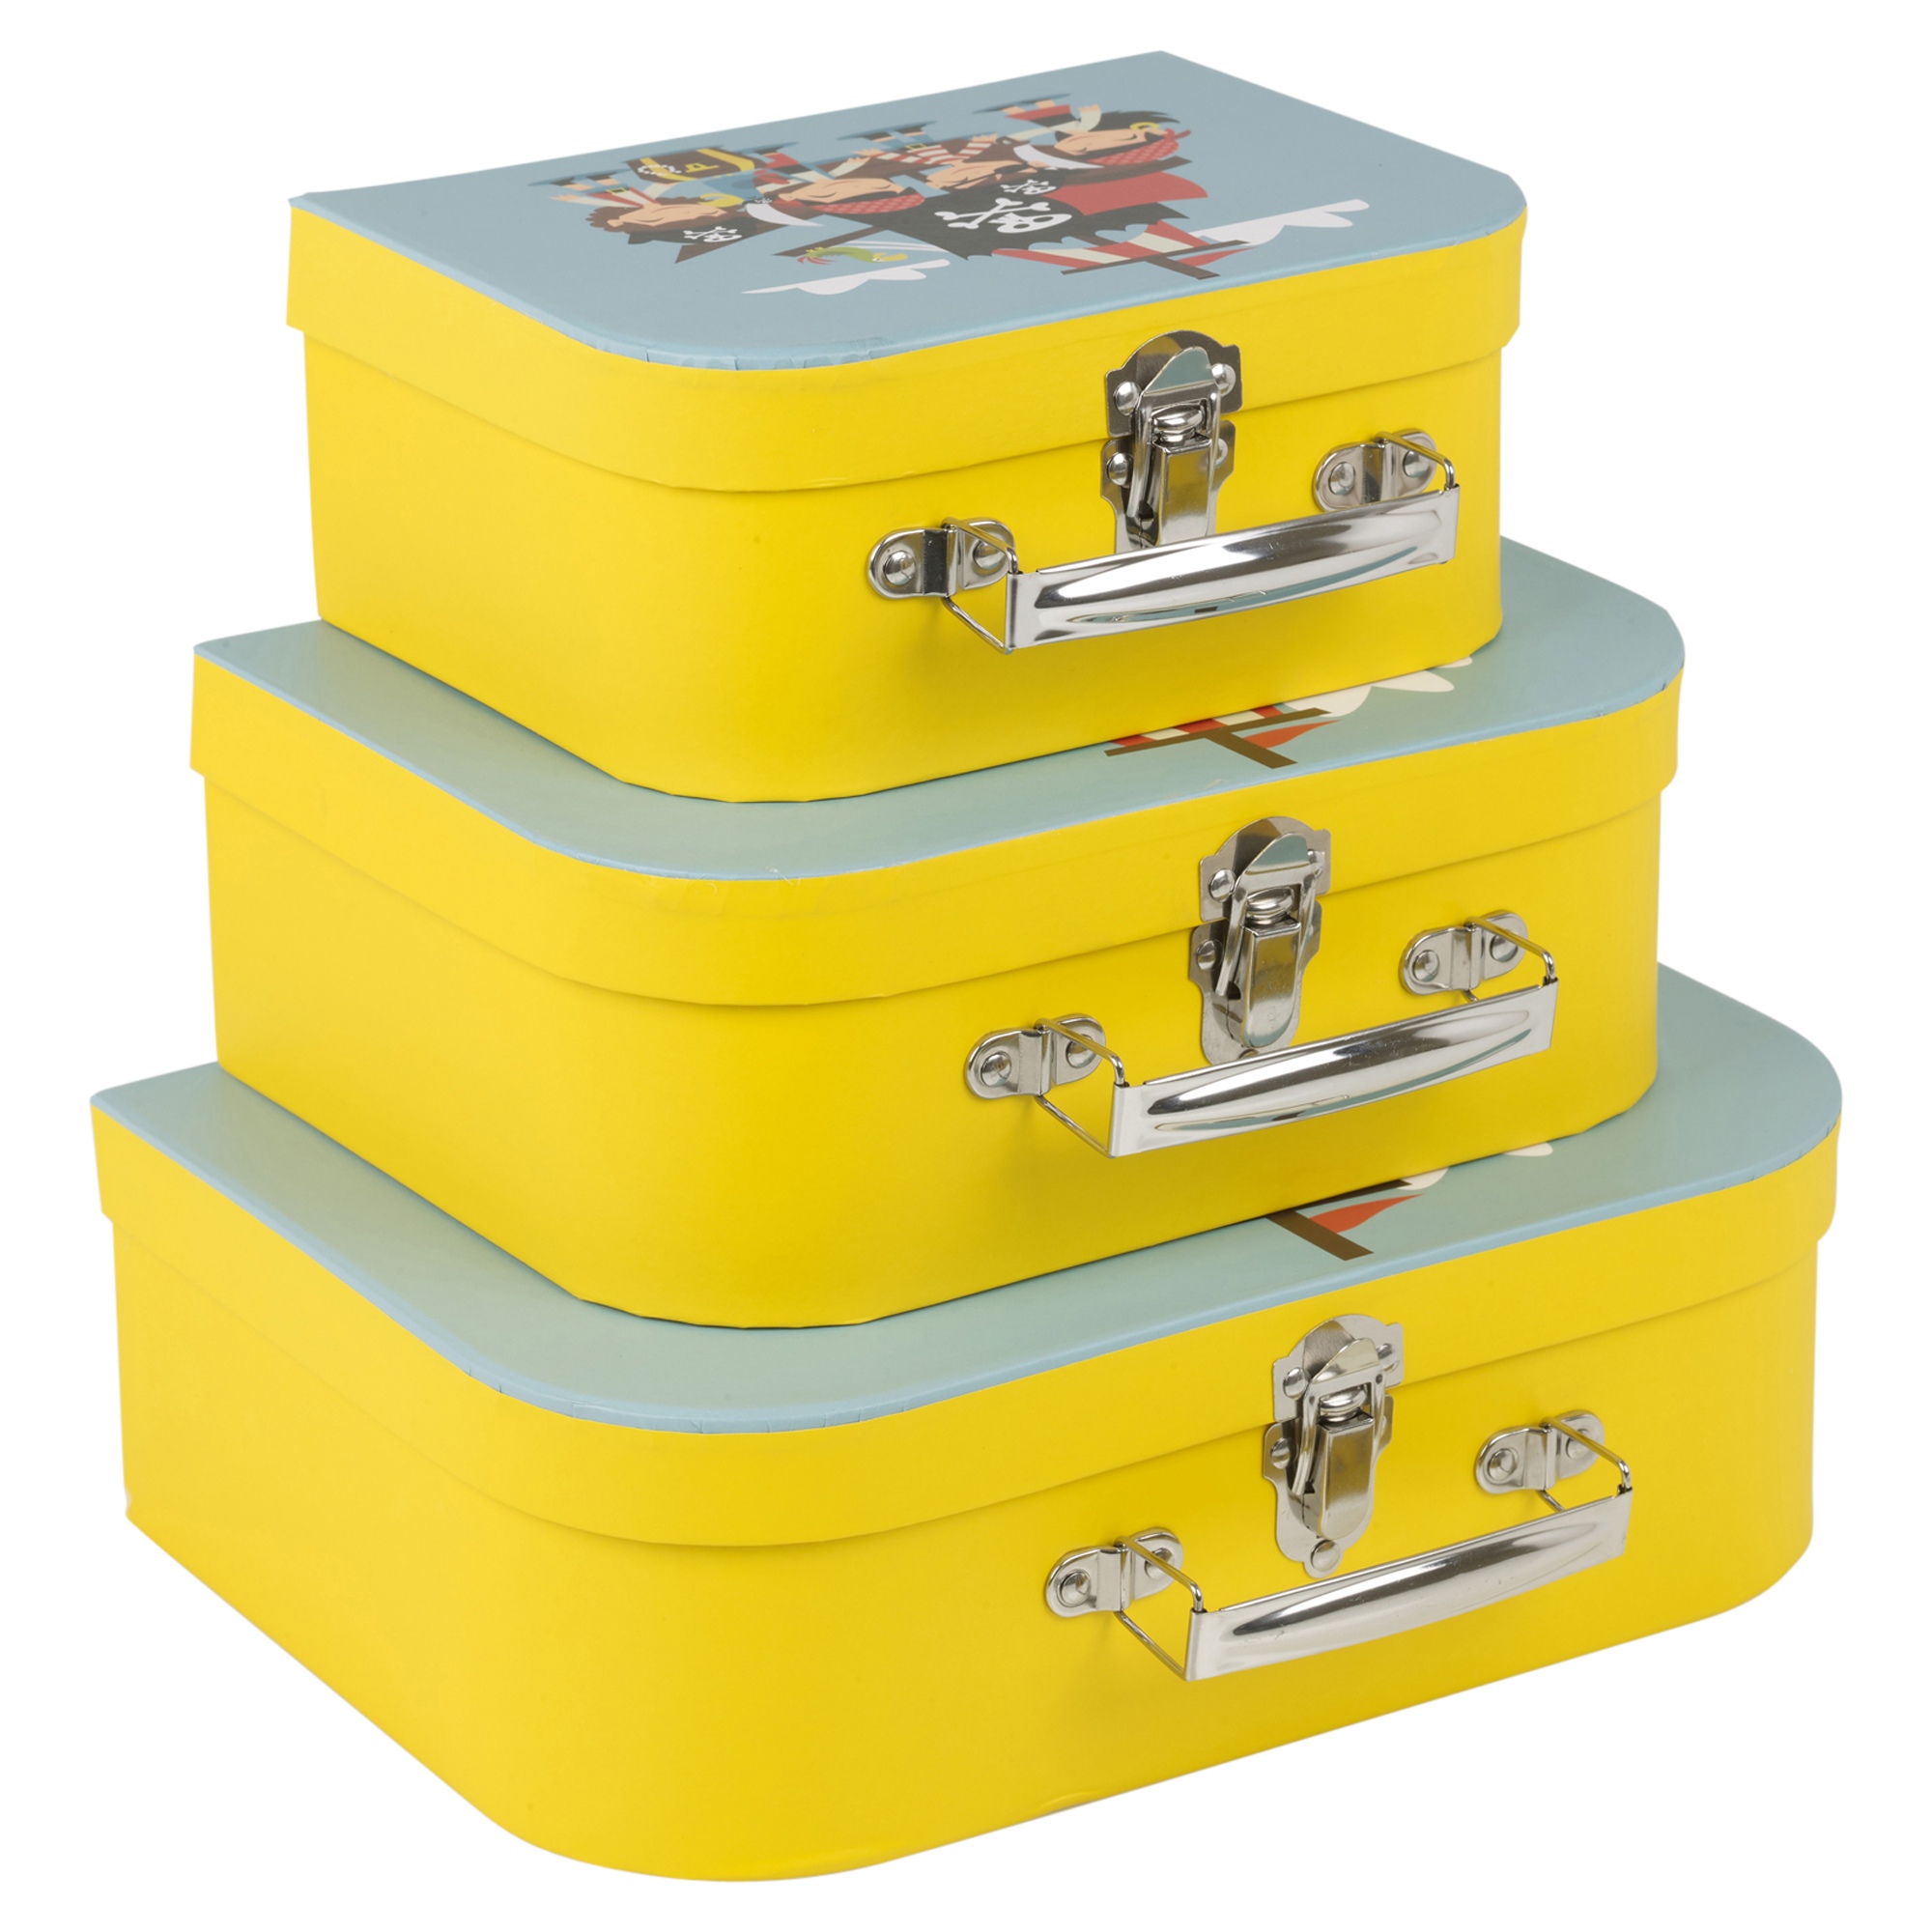 Download 3pcs Kids Storage Suitcase School Craft Carry Case Set Clothes Toys Books Box | eBay